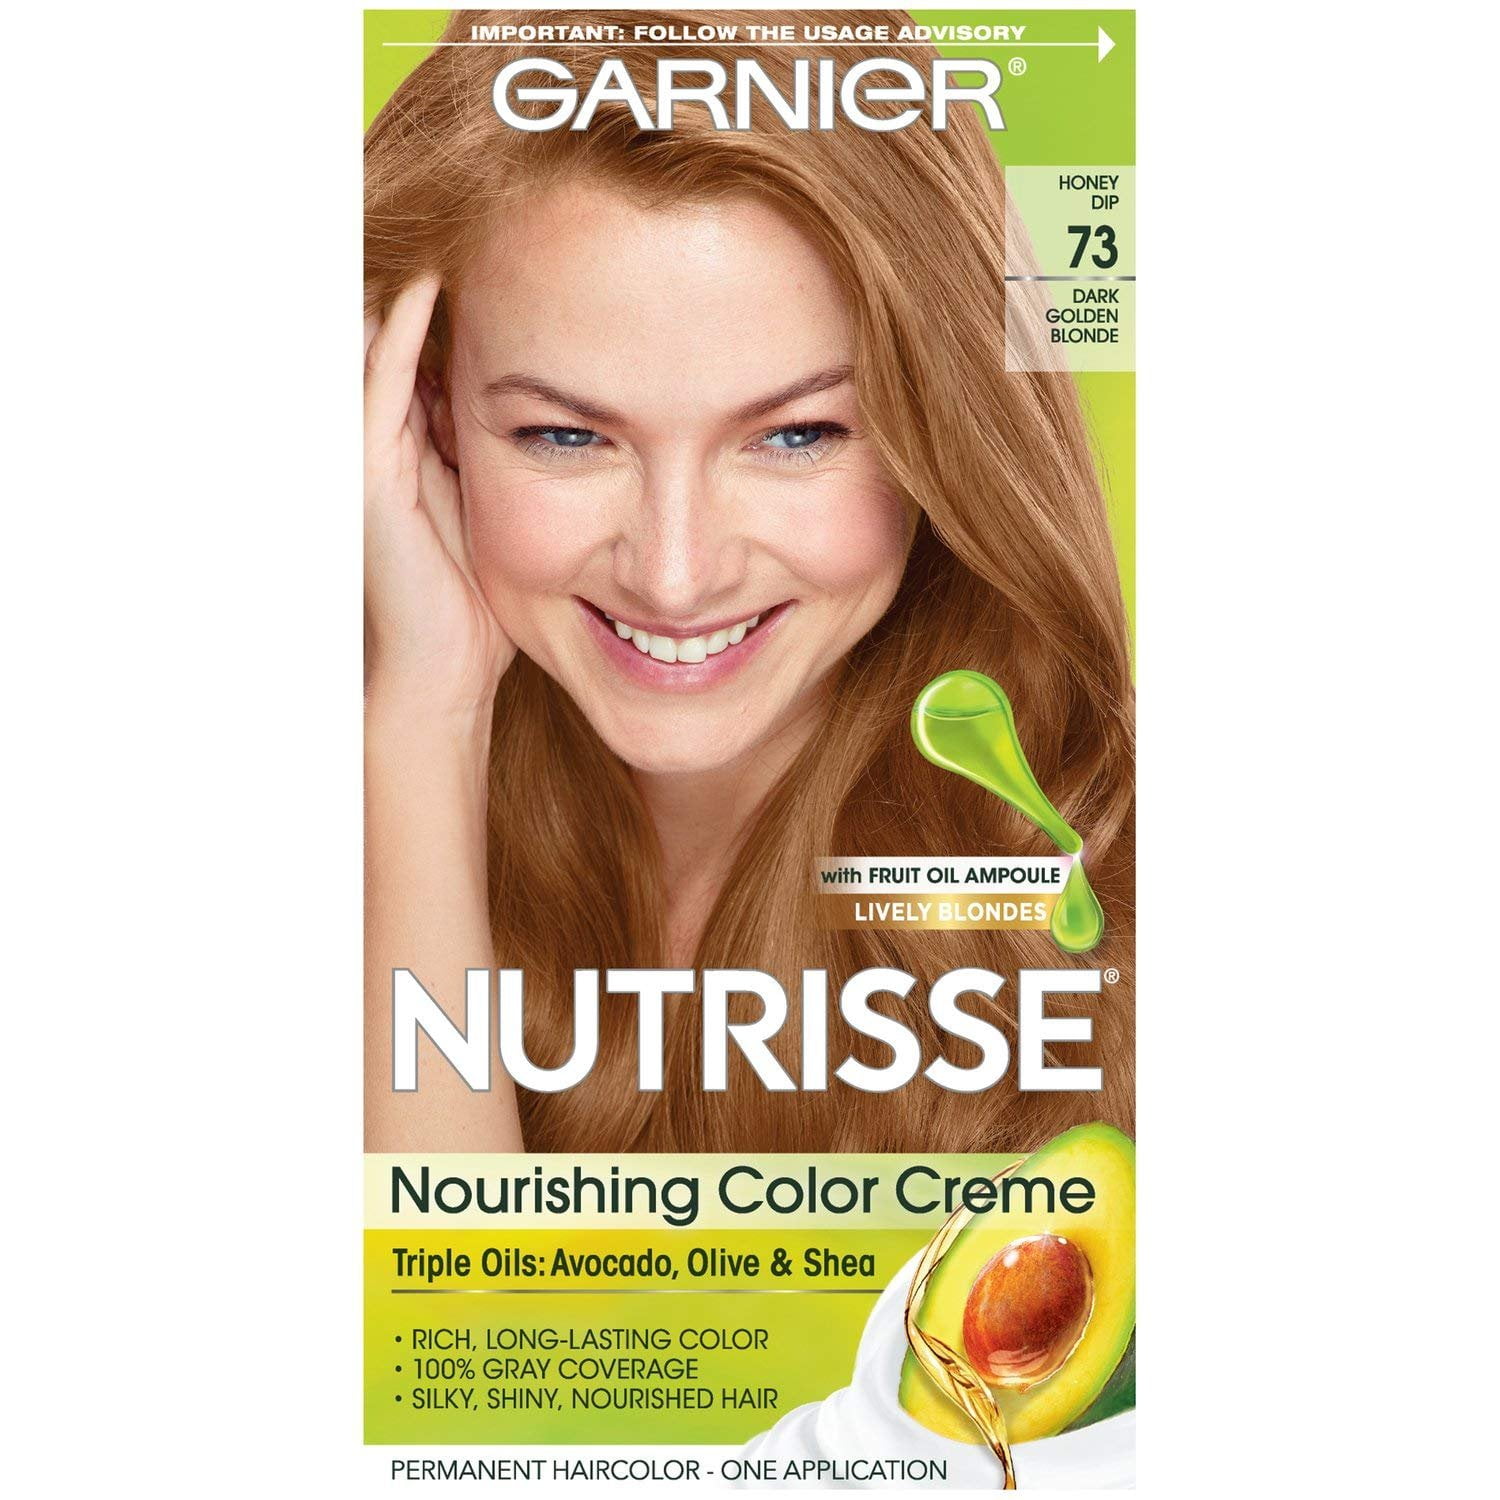 Garnier Nutrisse Nourishing Hair Color Creme 73 Dark Golden Blonde Honey Dip